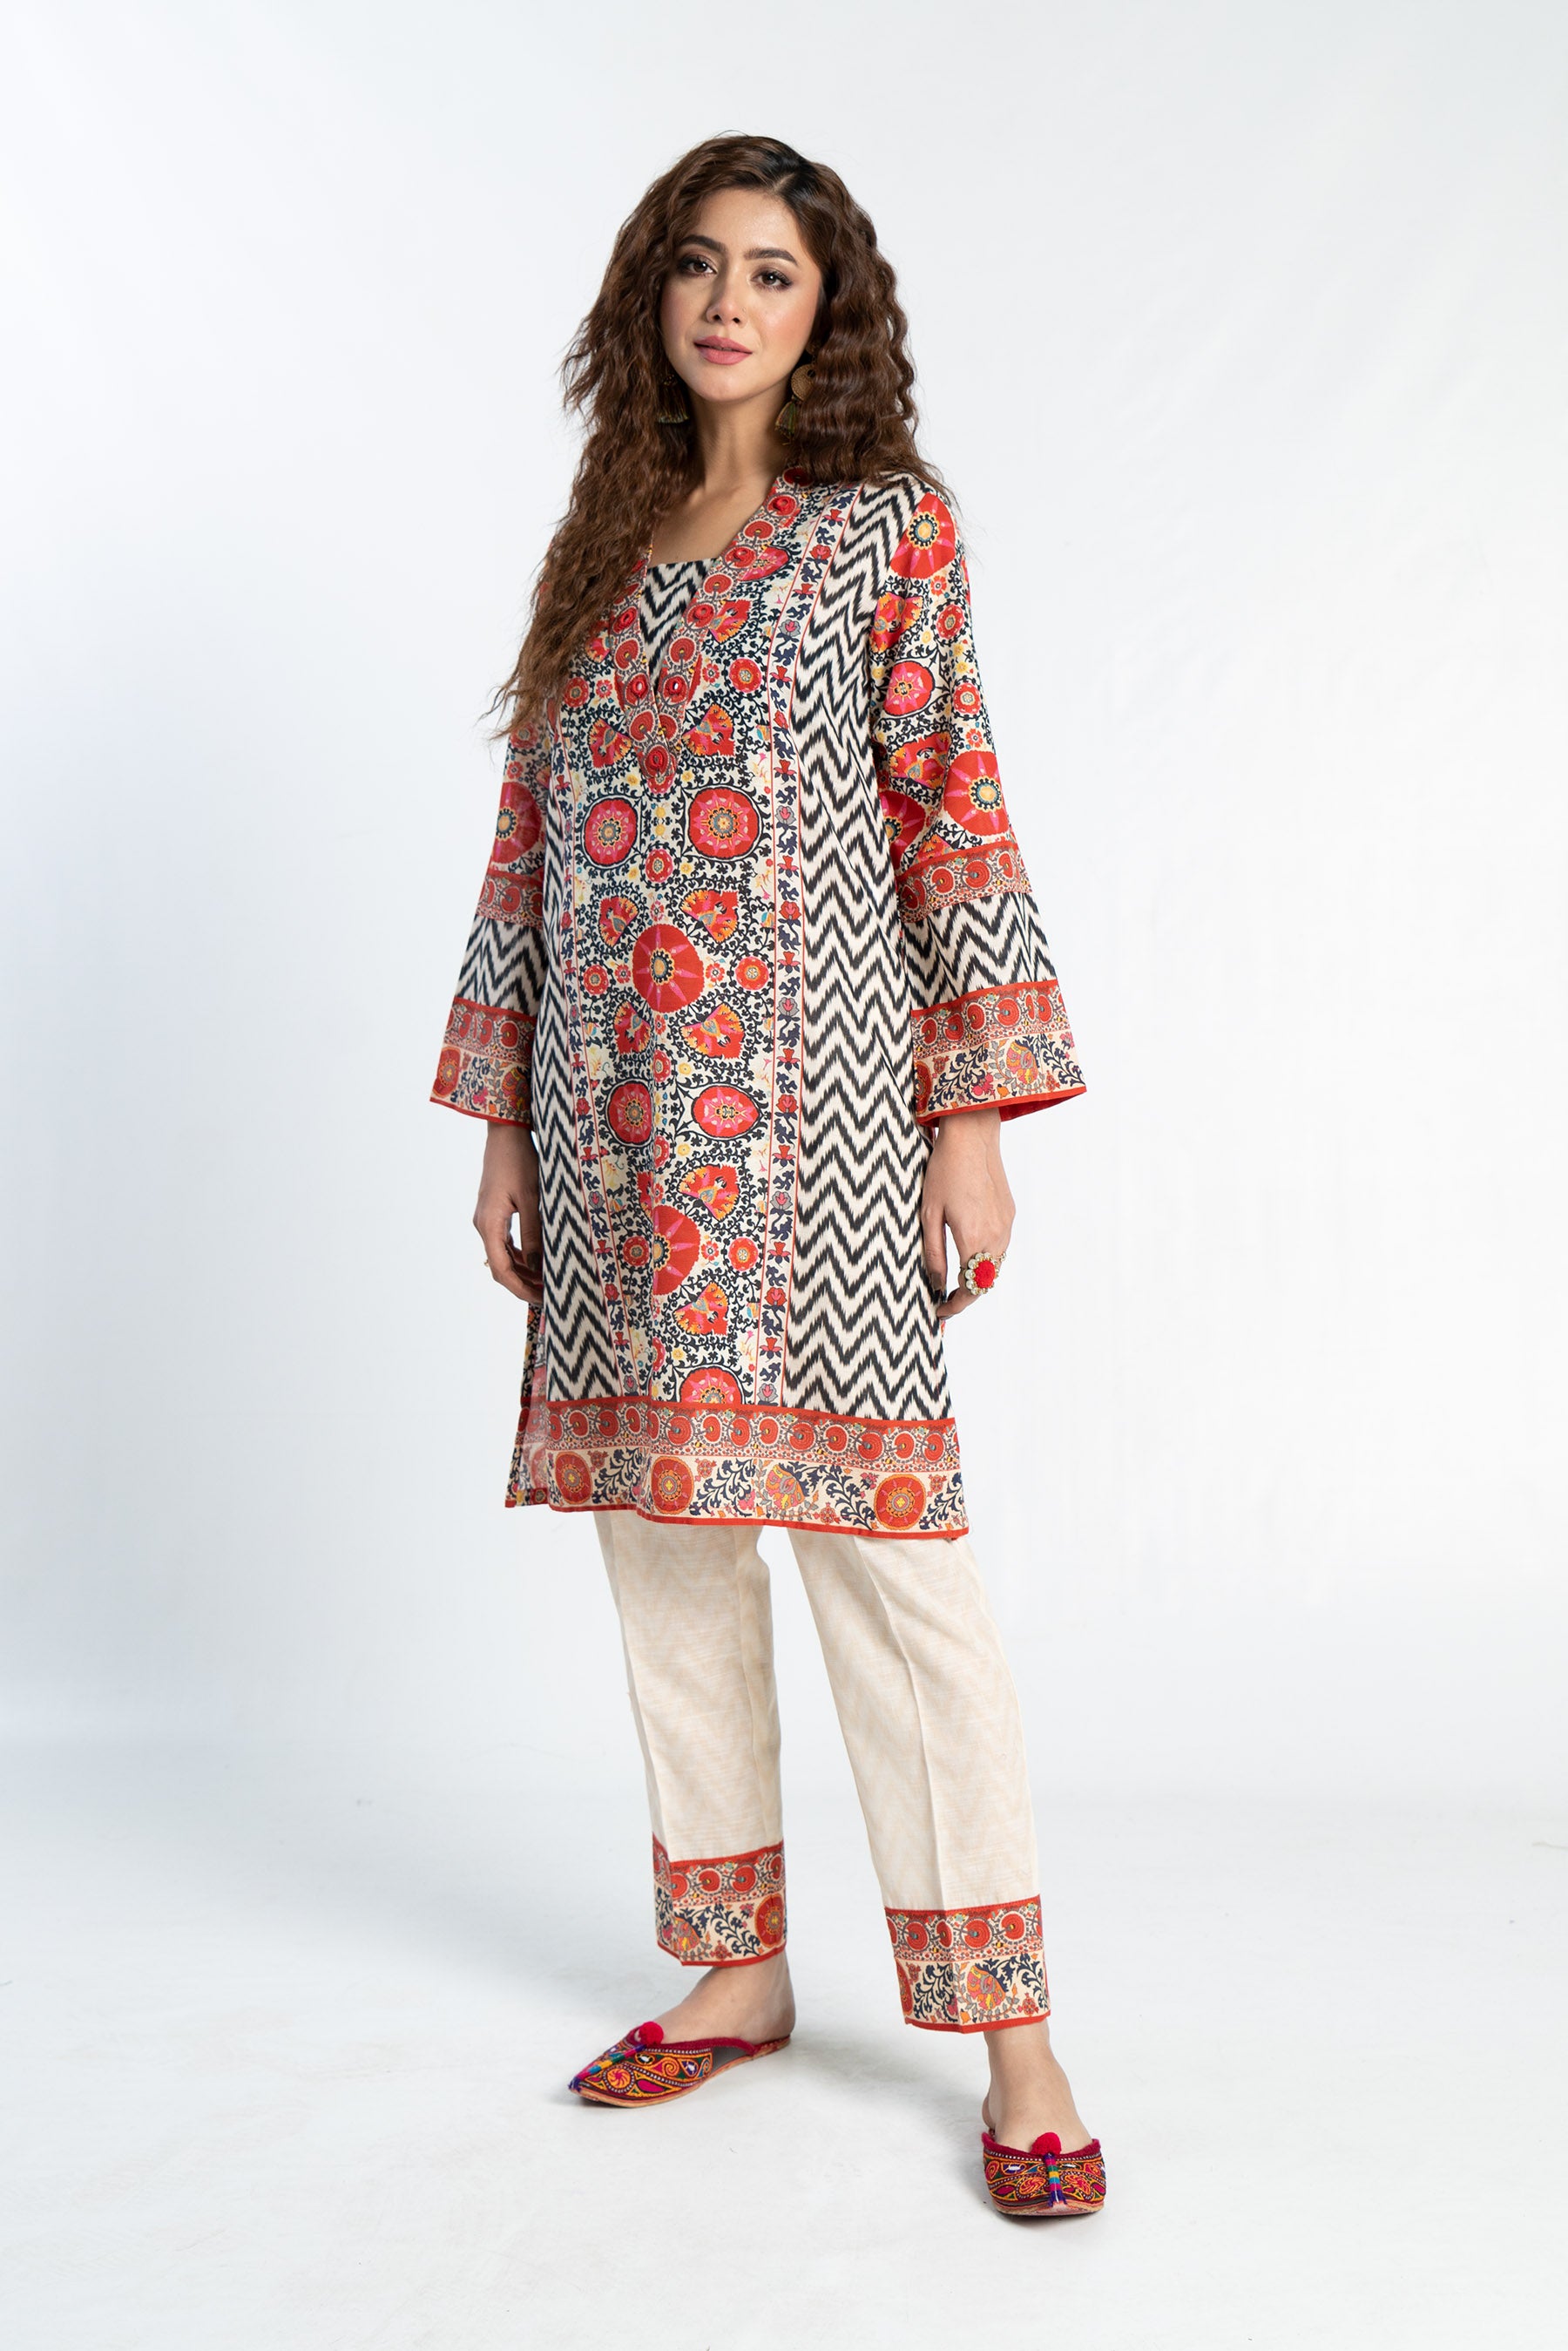 Suzani Ikat in Multi coloured Printed Slub Khaddar fabric